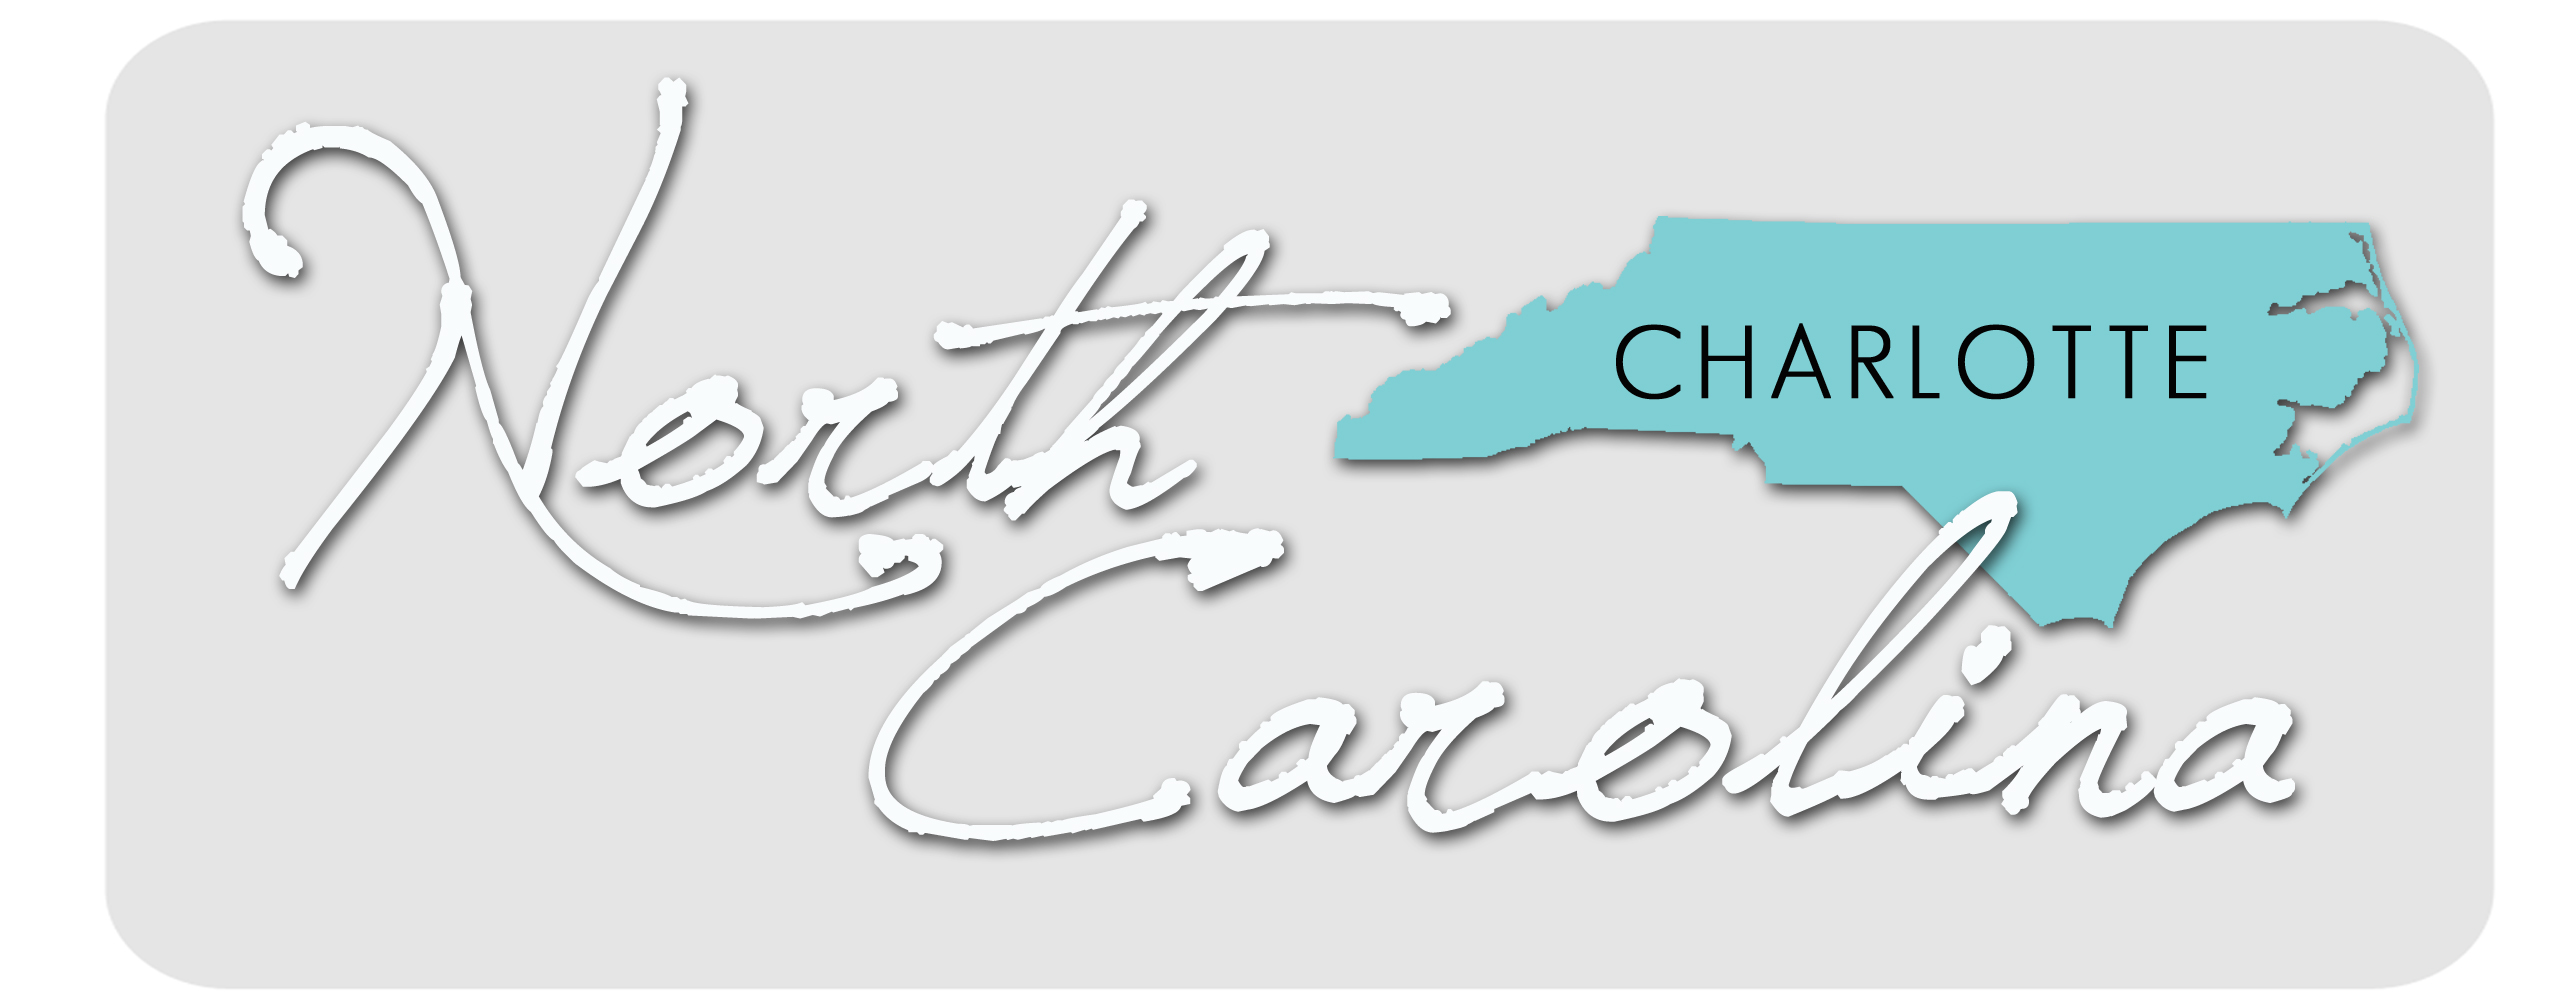 Charlotte Health insurance